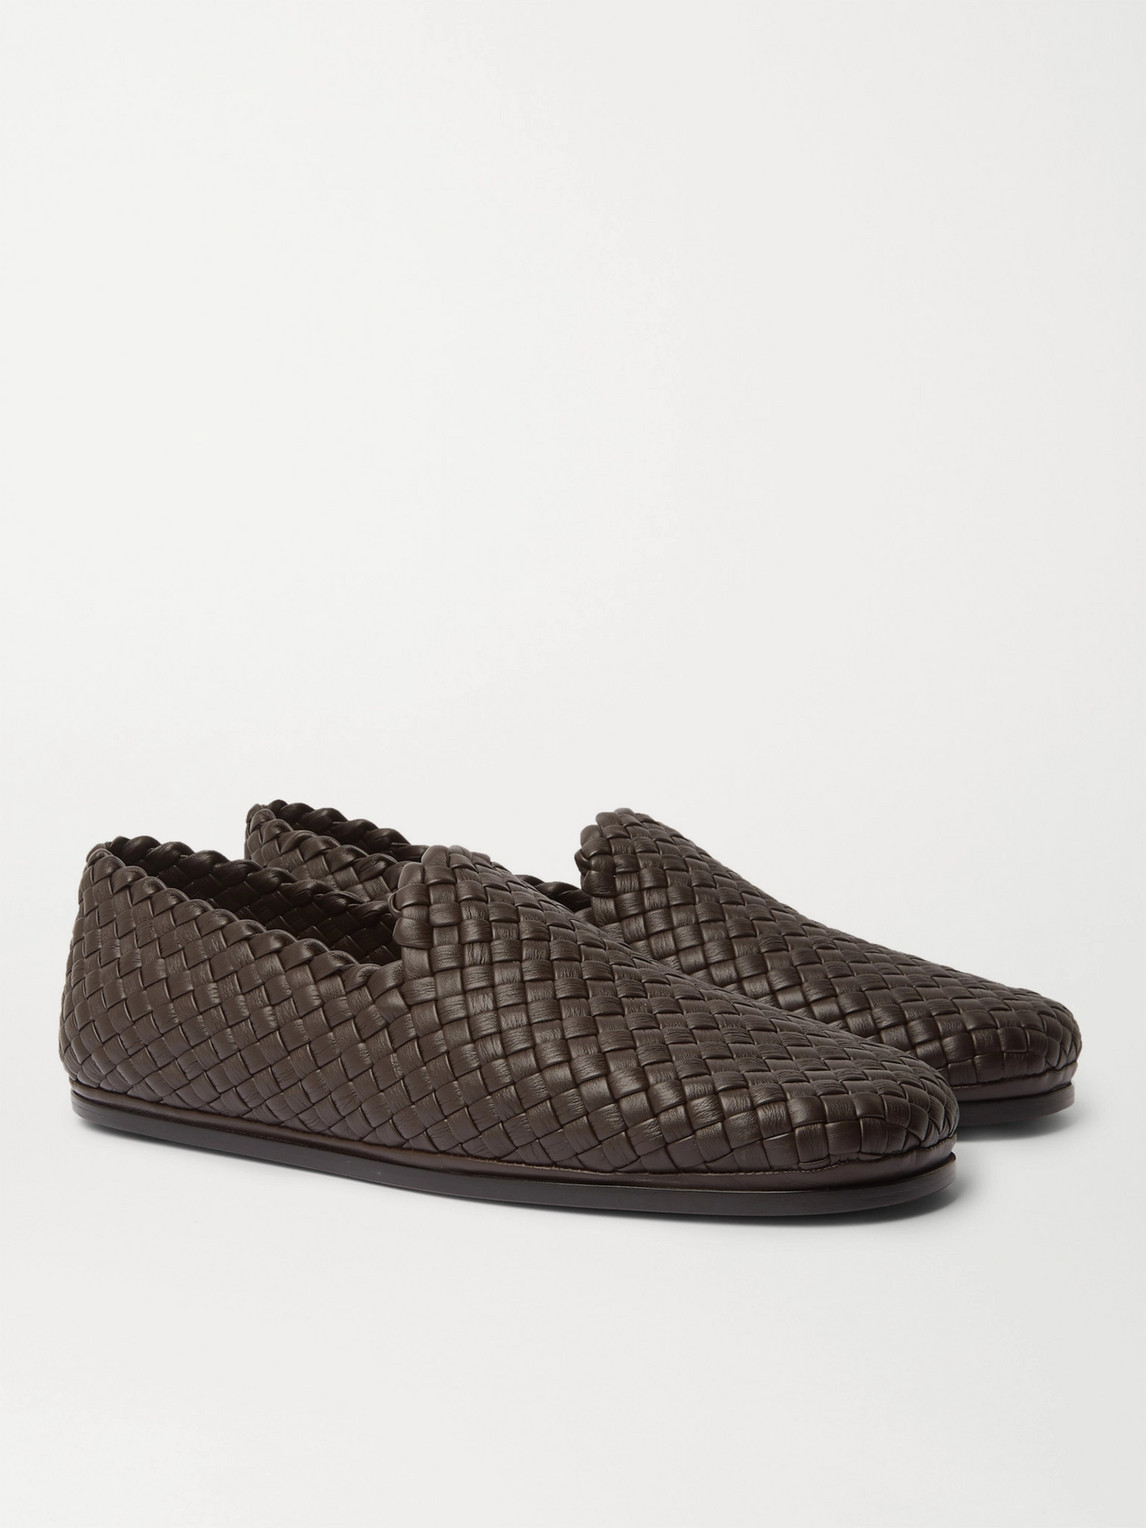 Bottega Veneta Intrecciato Leather Loafers In Brown